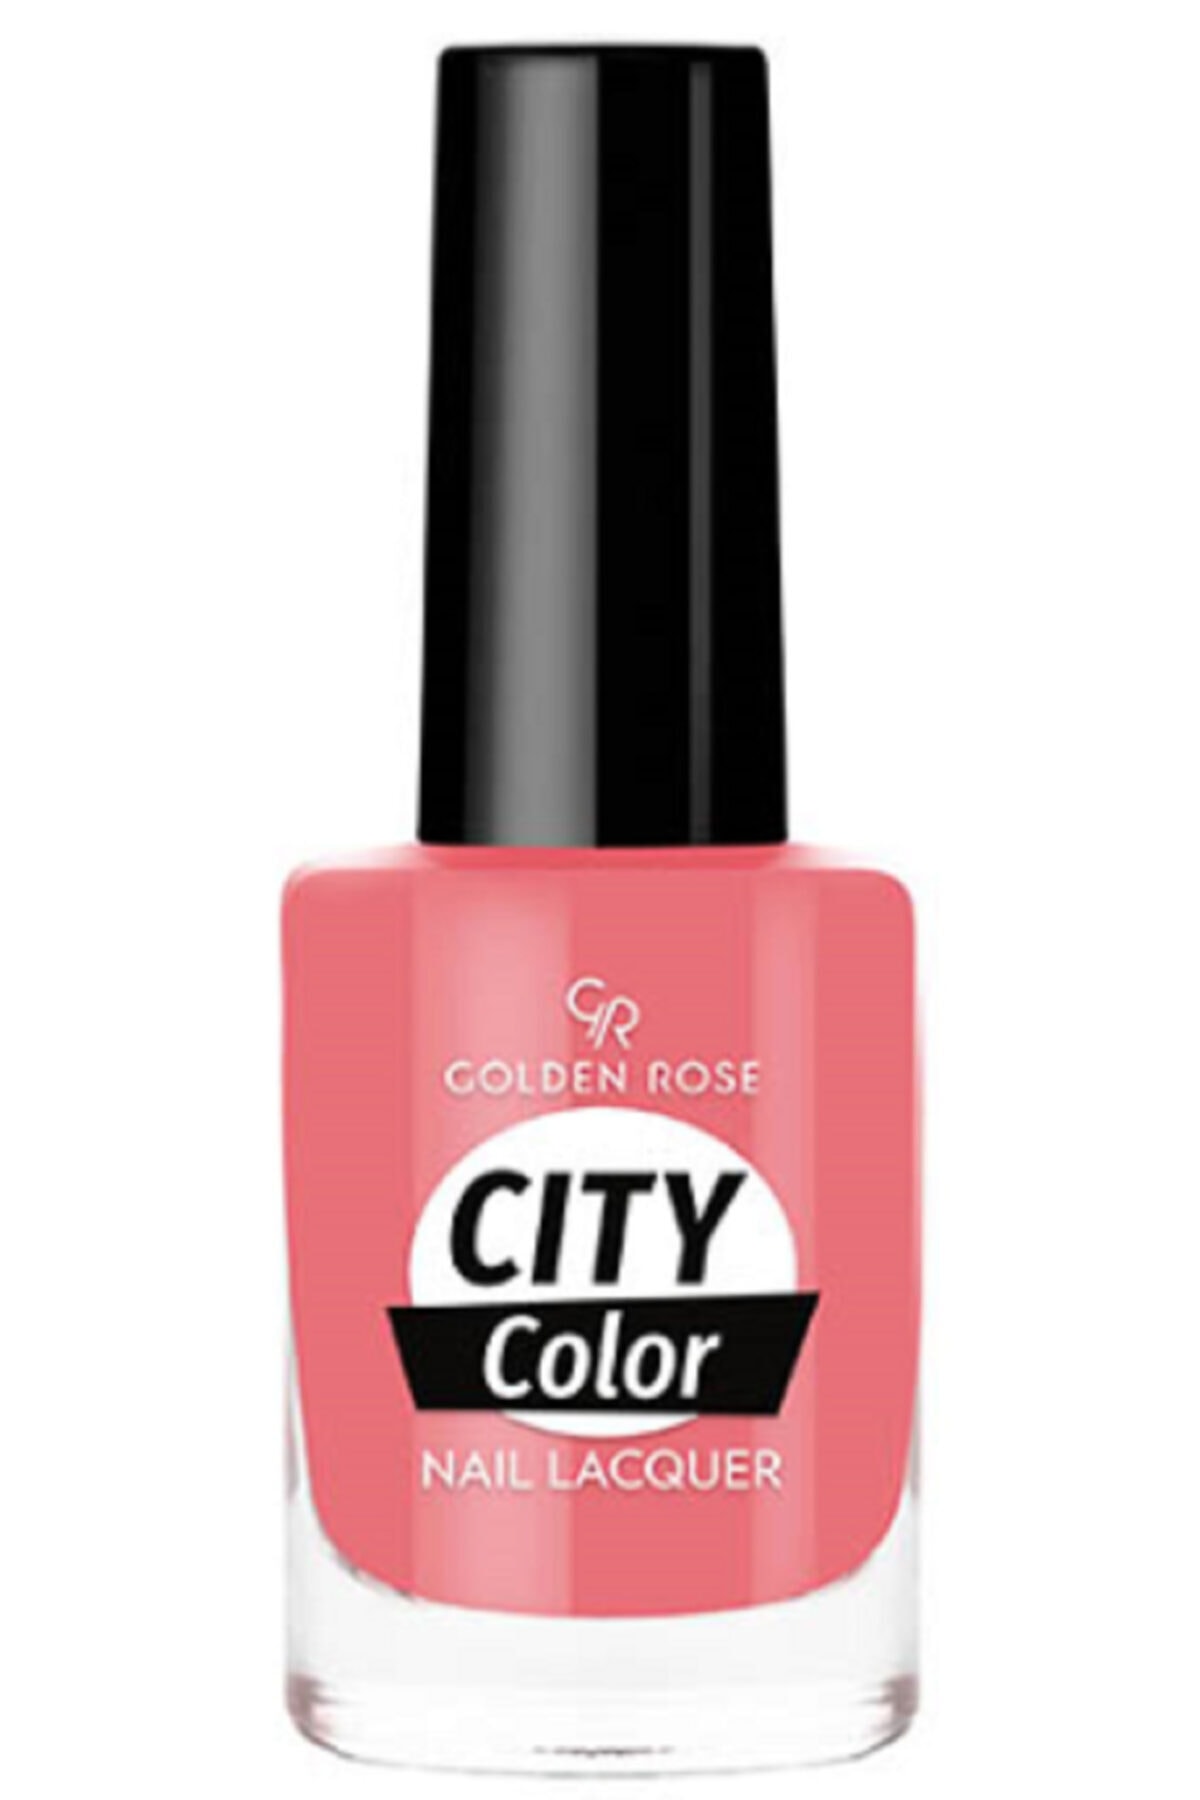 لاک ناخن سیتی کالر City color رنگ صورتی سرخ شماره ۶۹ گلدن رز Golden Rose